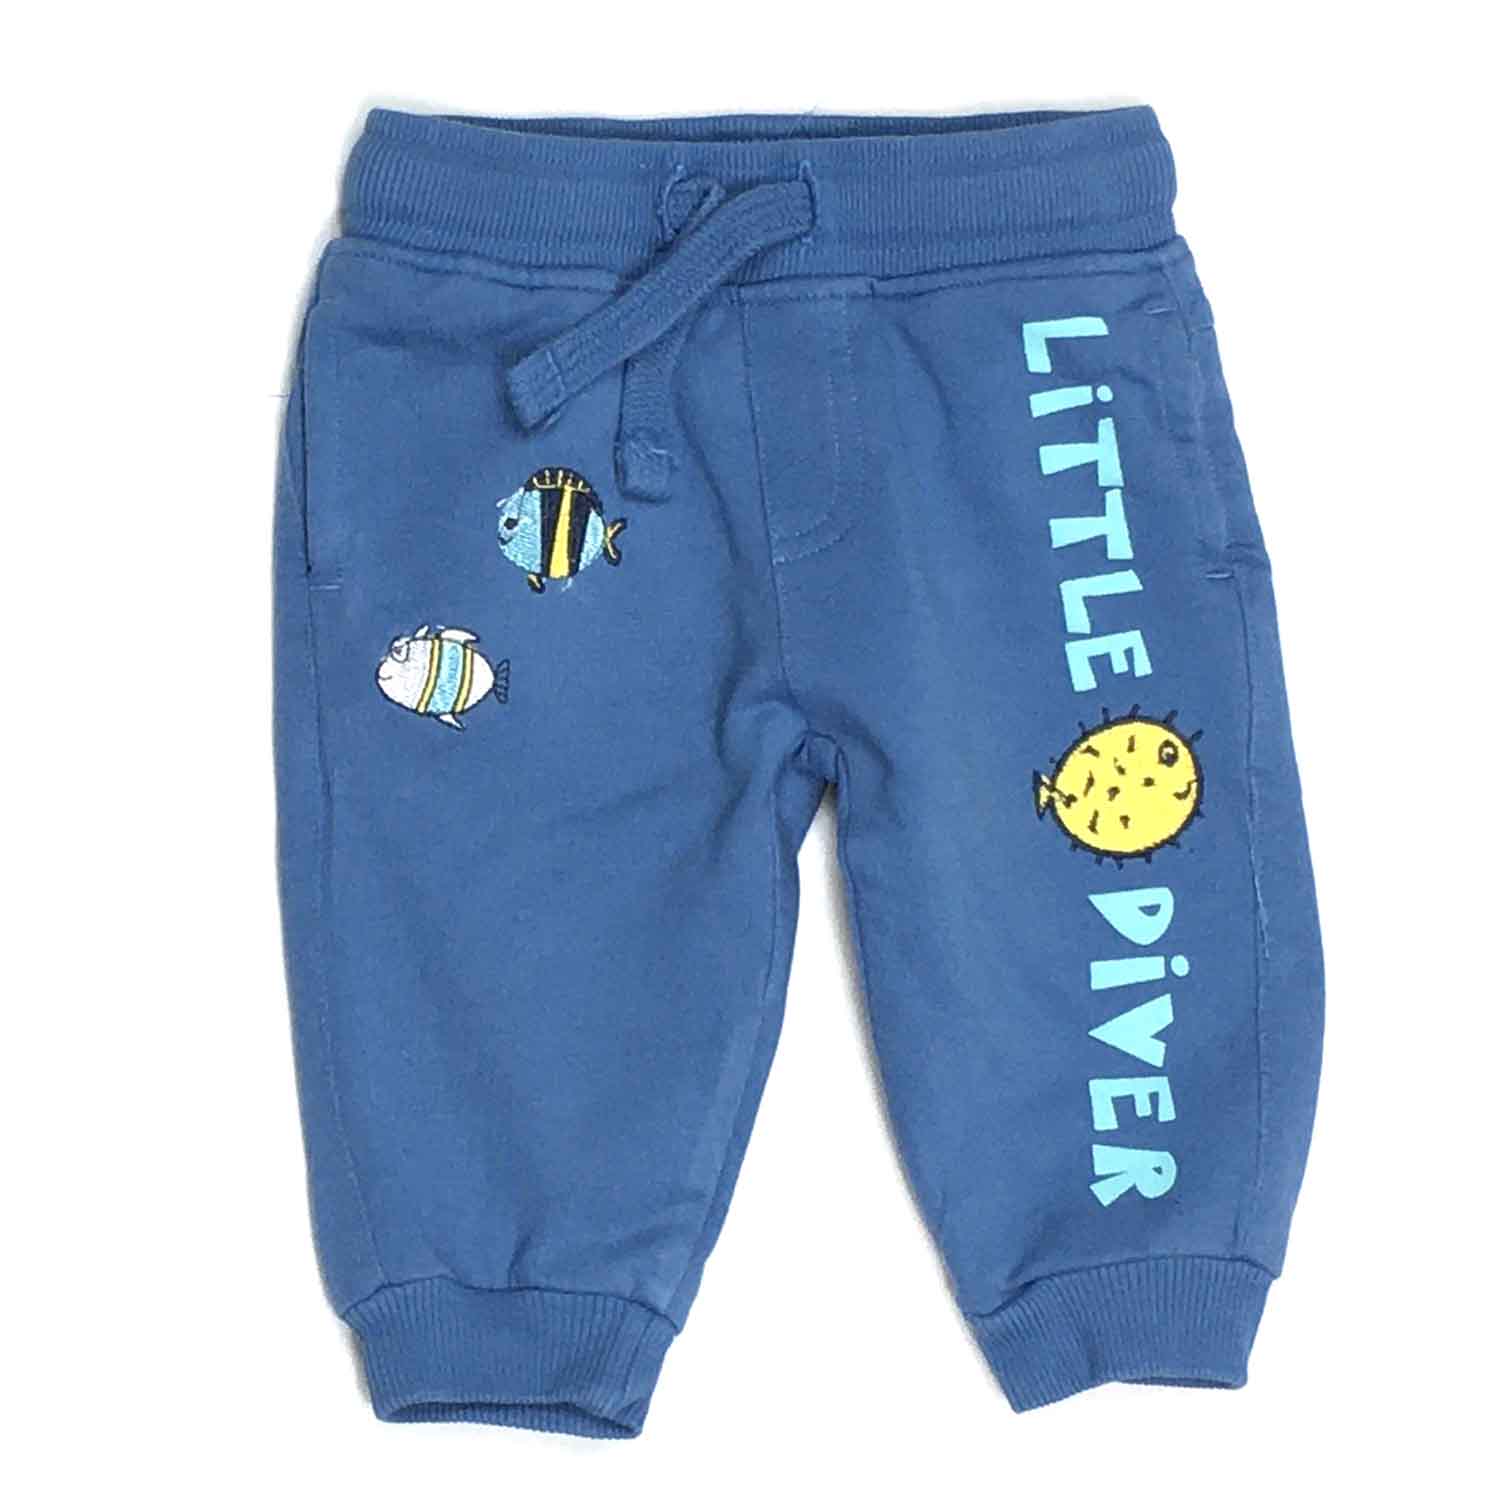 Pantalon jogging bleu bébé garçon - yelaa